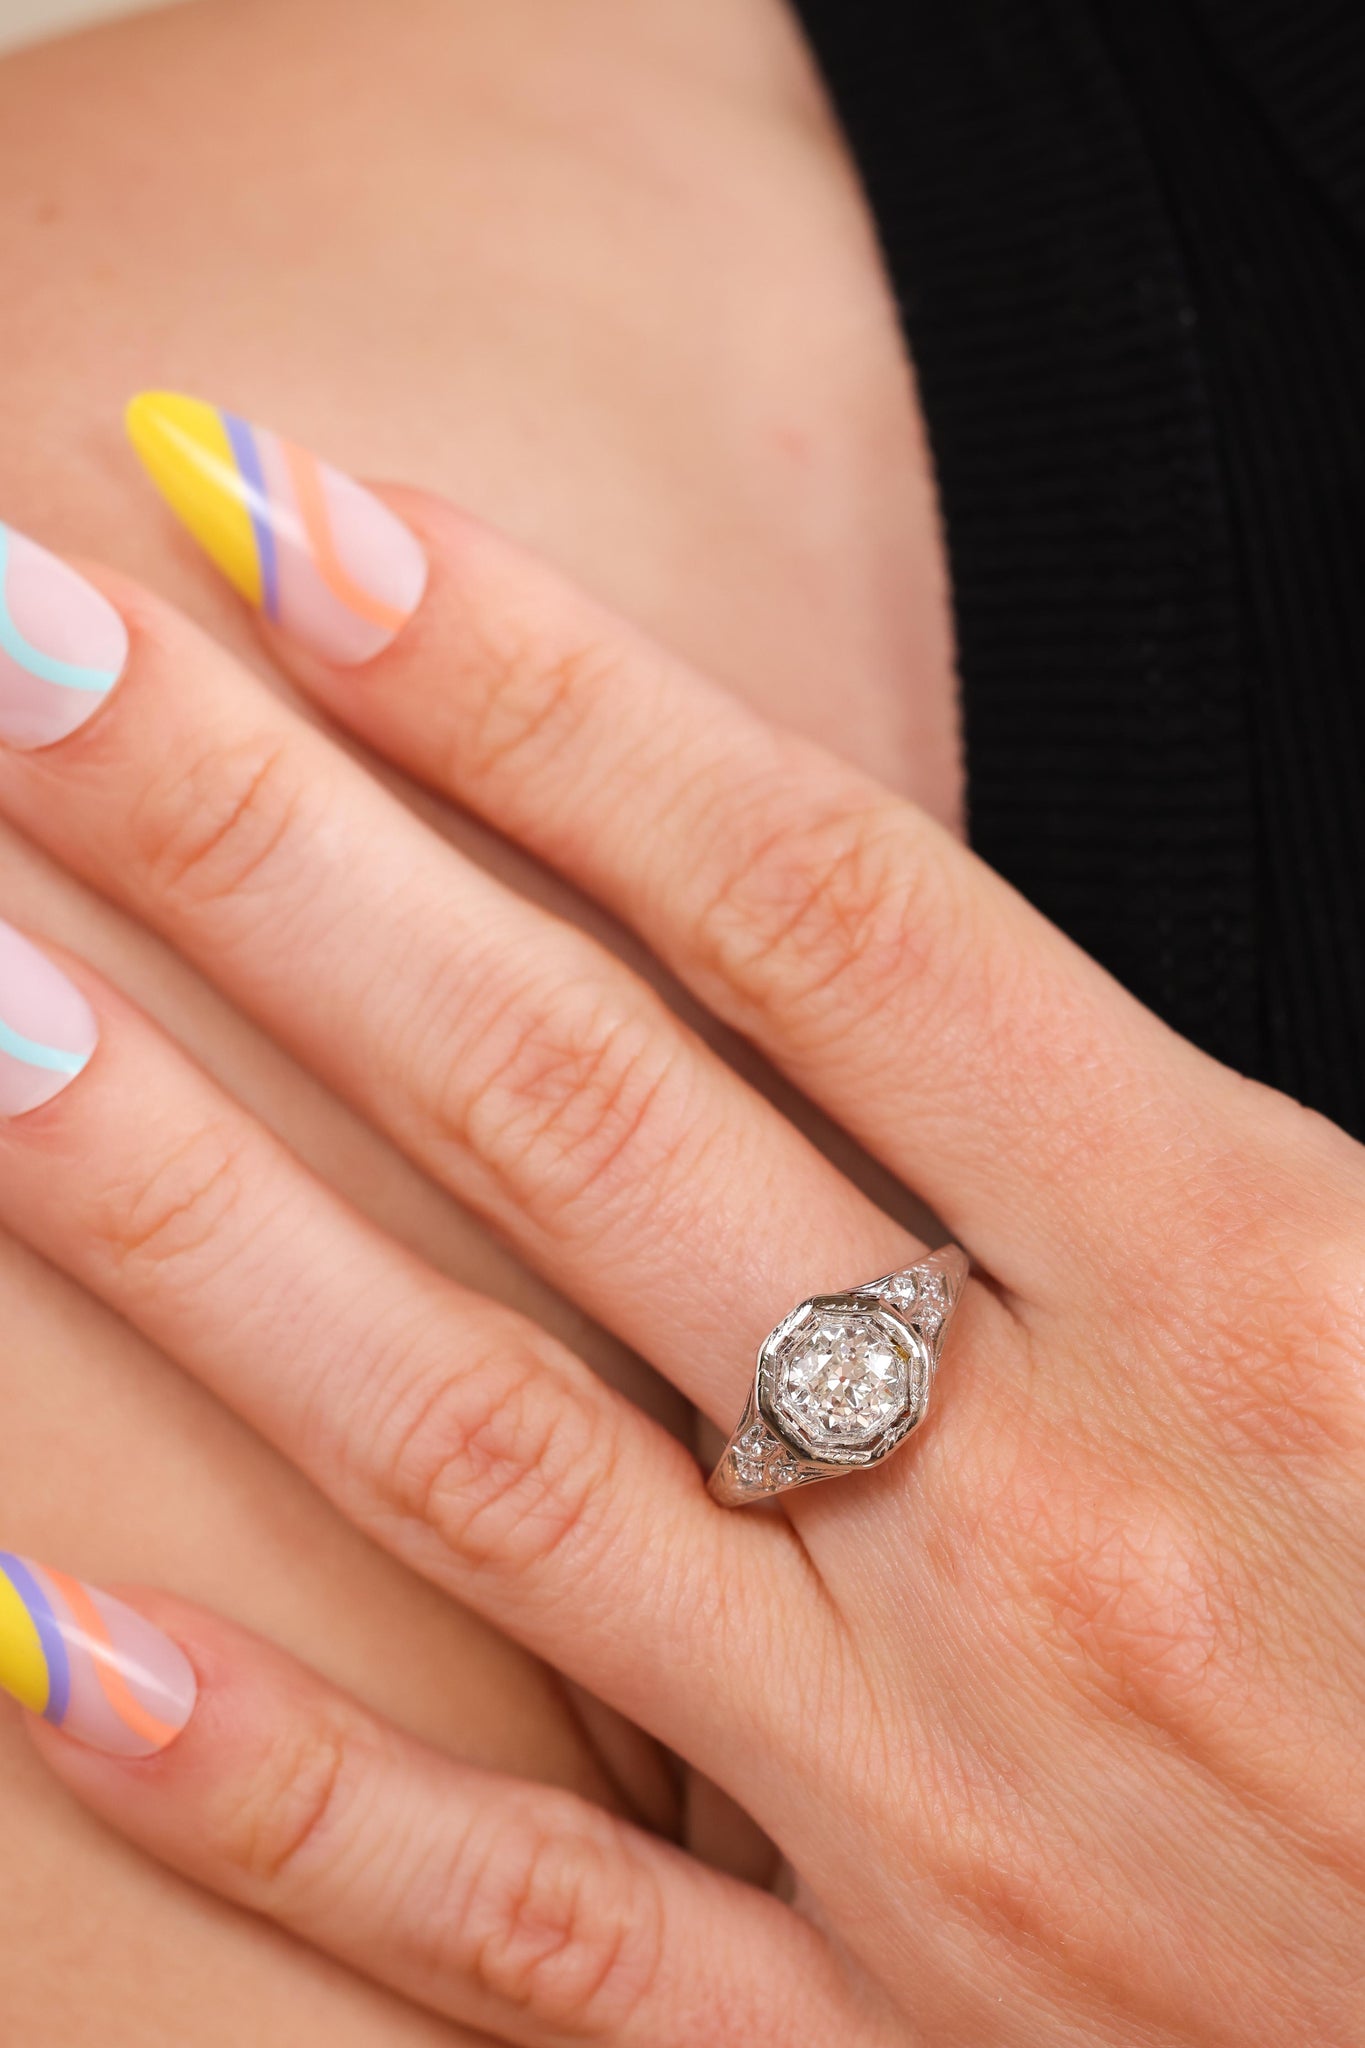 Edwardian Platinum Diamond Ring